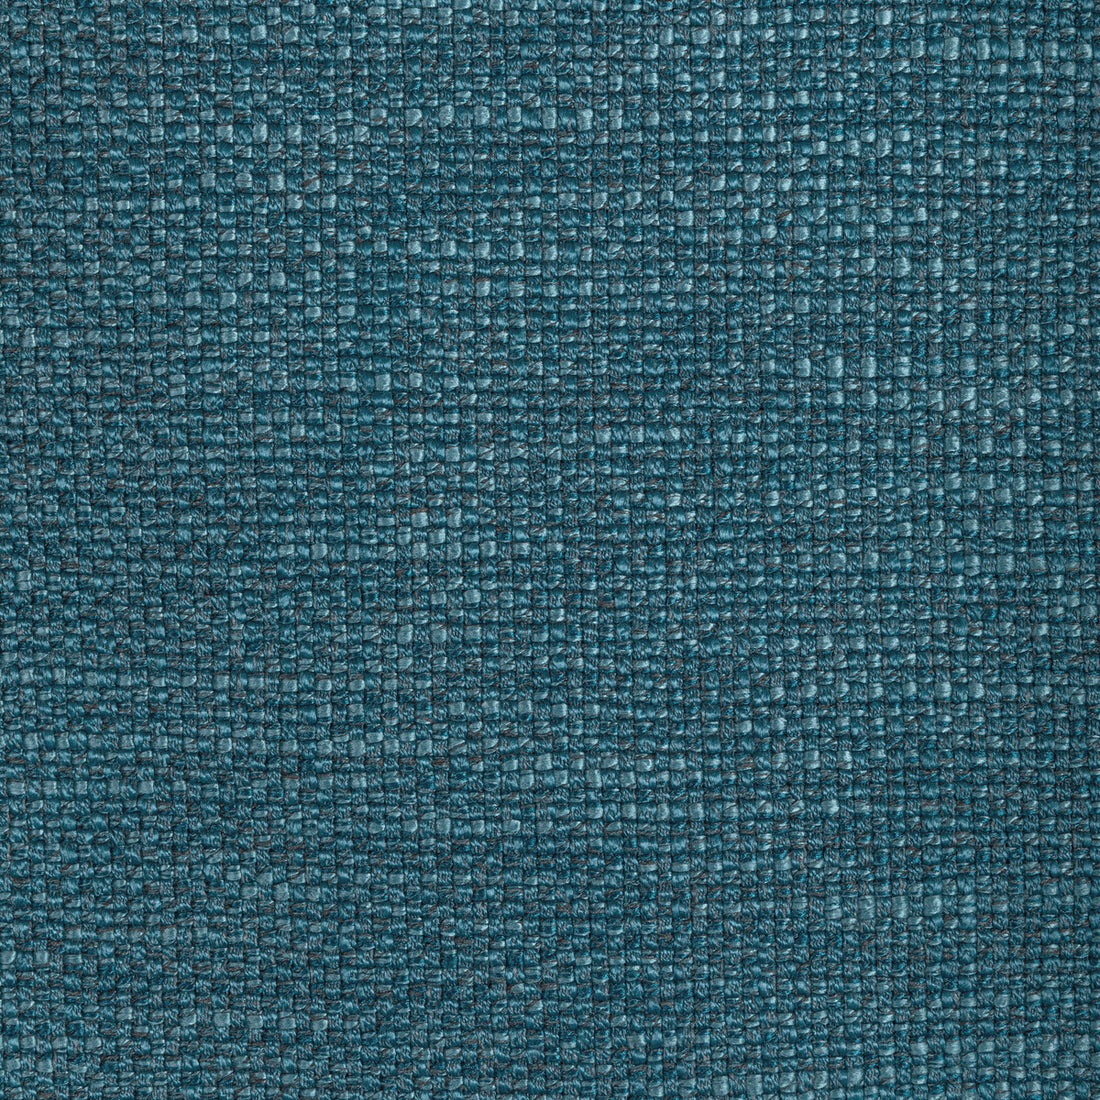 Kravet Design fabric in 36594-35 color - pattern 36594.35.0 - by Kravet Design in the Performance Kravetarmor collection